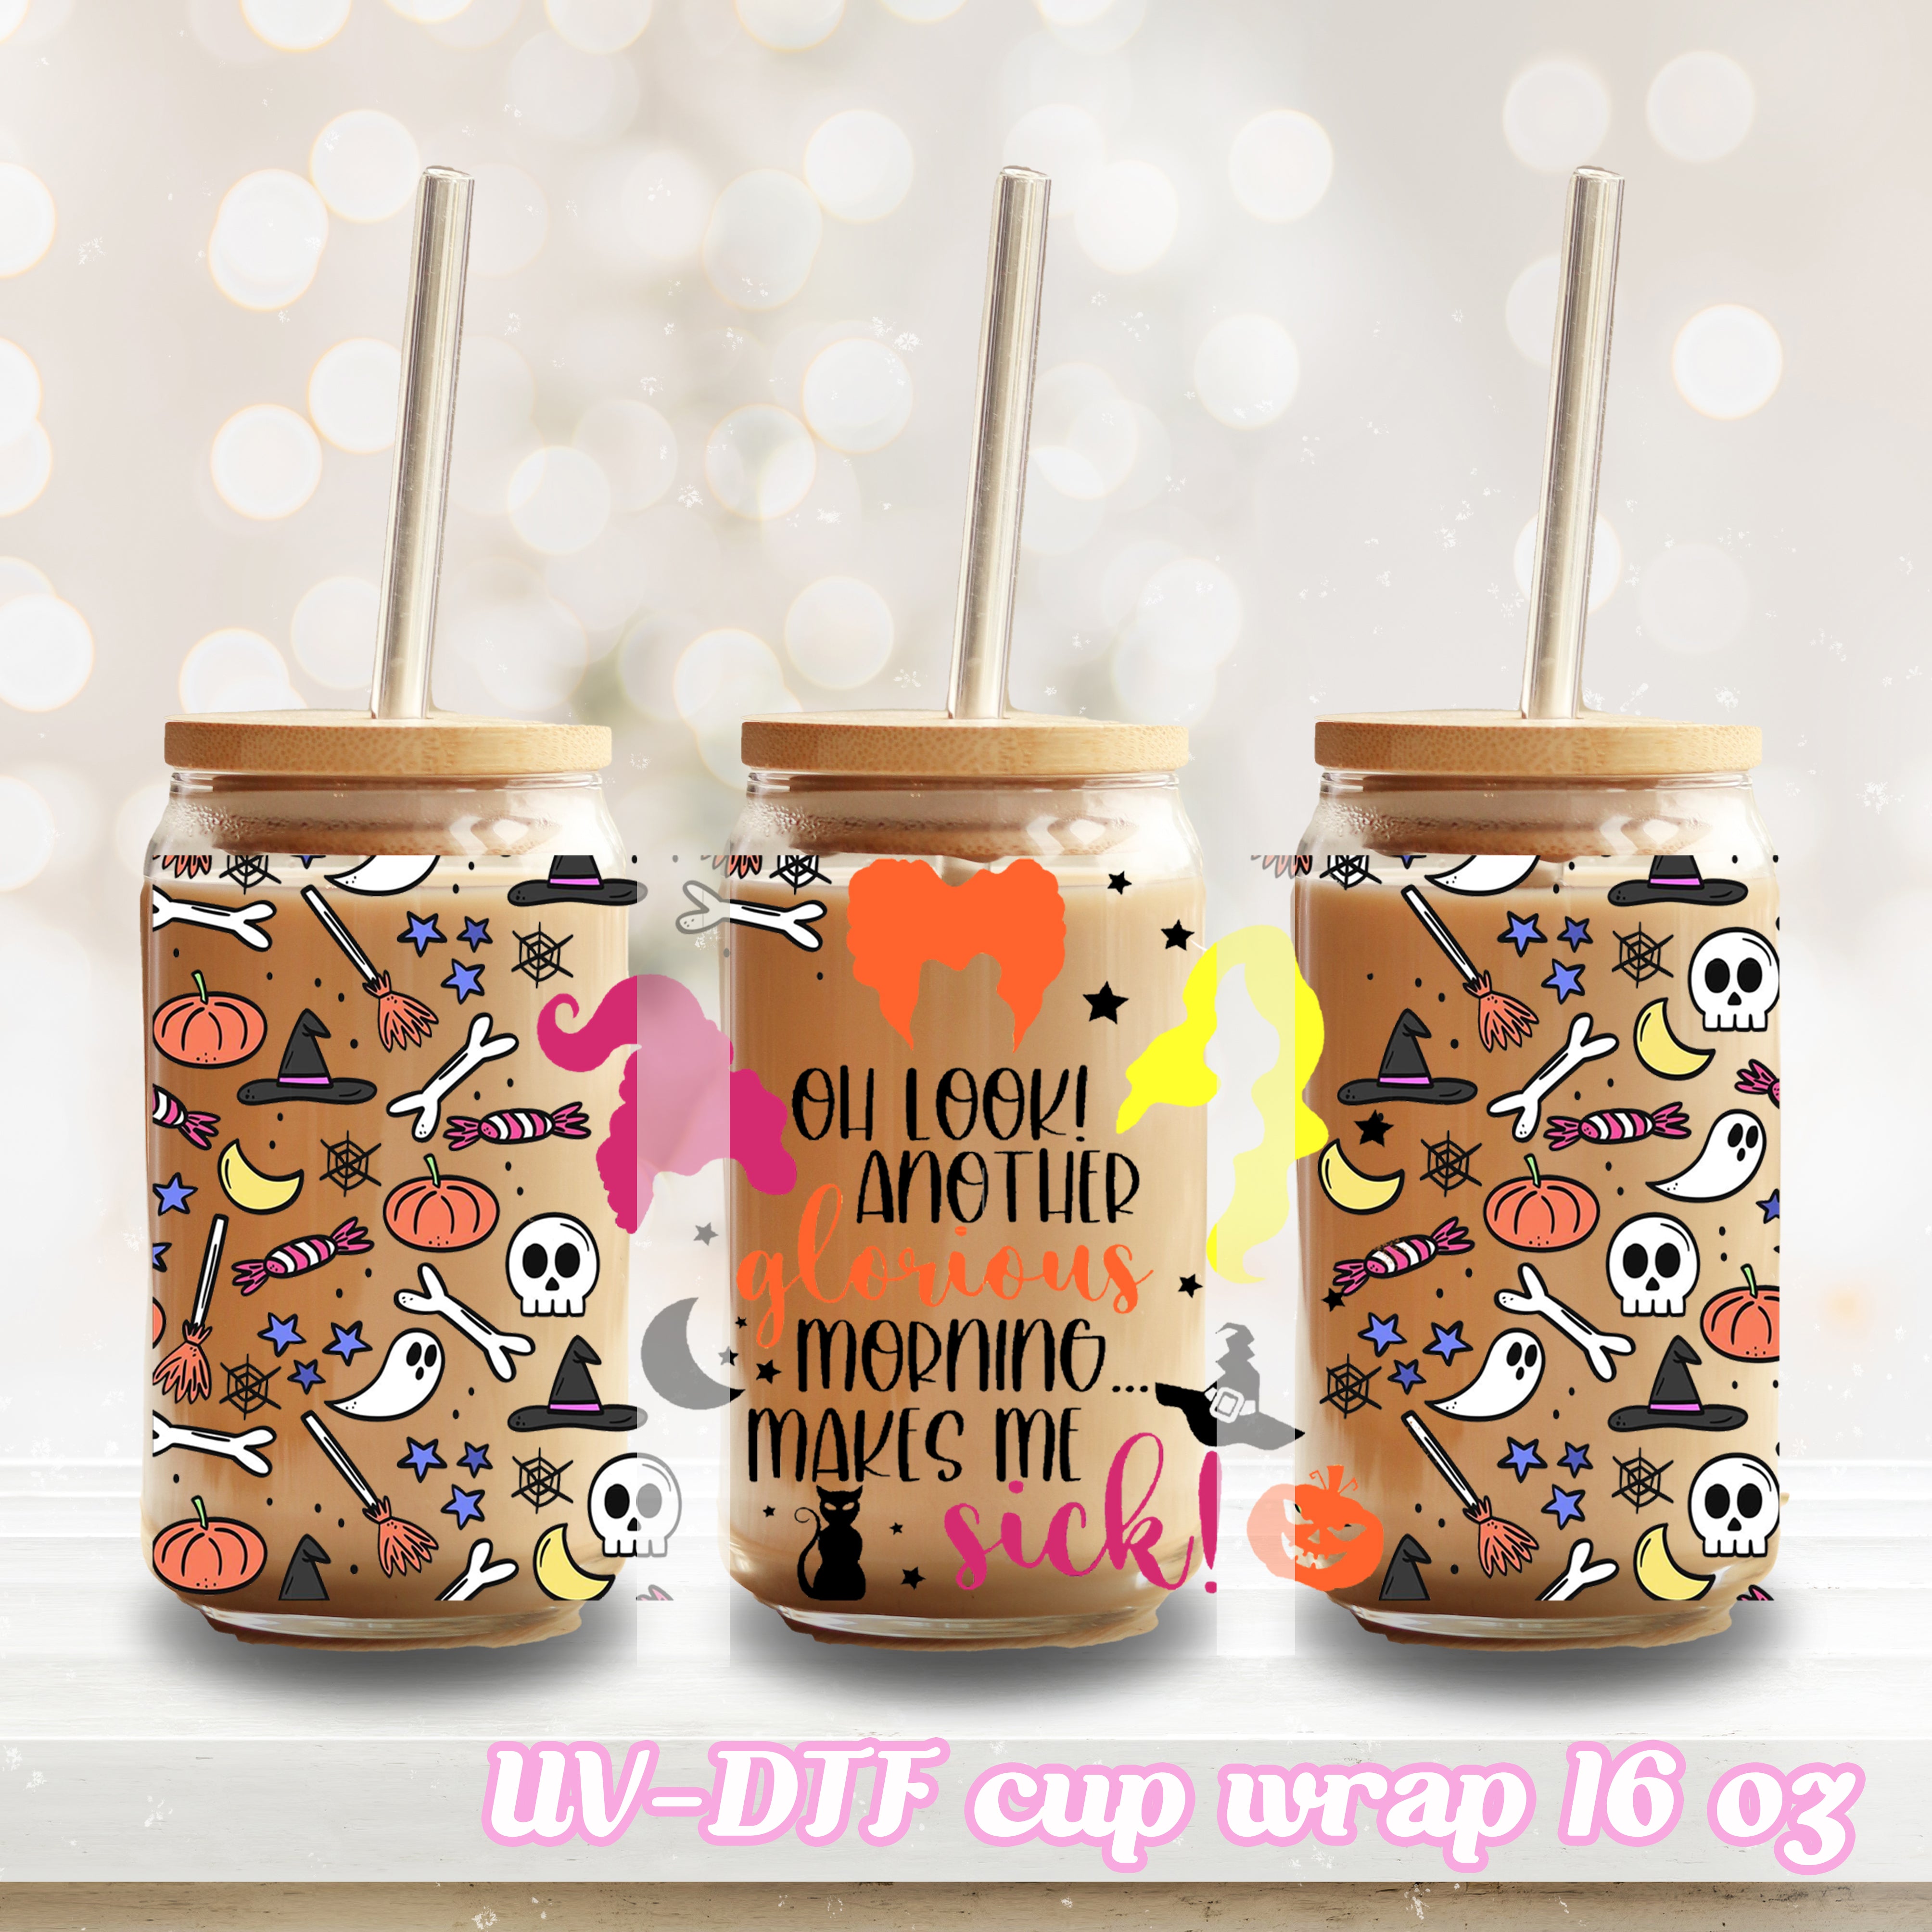 PRE ORDER - Crafty Girl - 16 oz UV DTF Cup Wrap